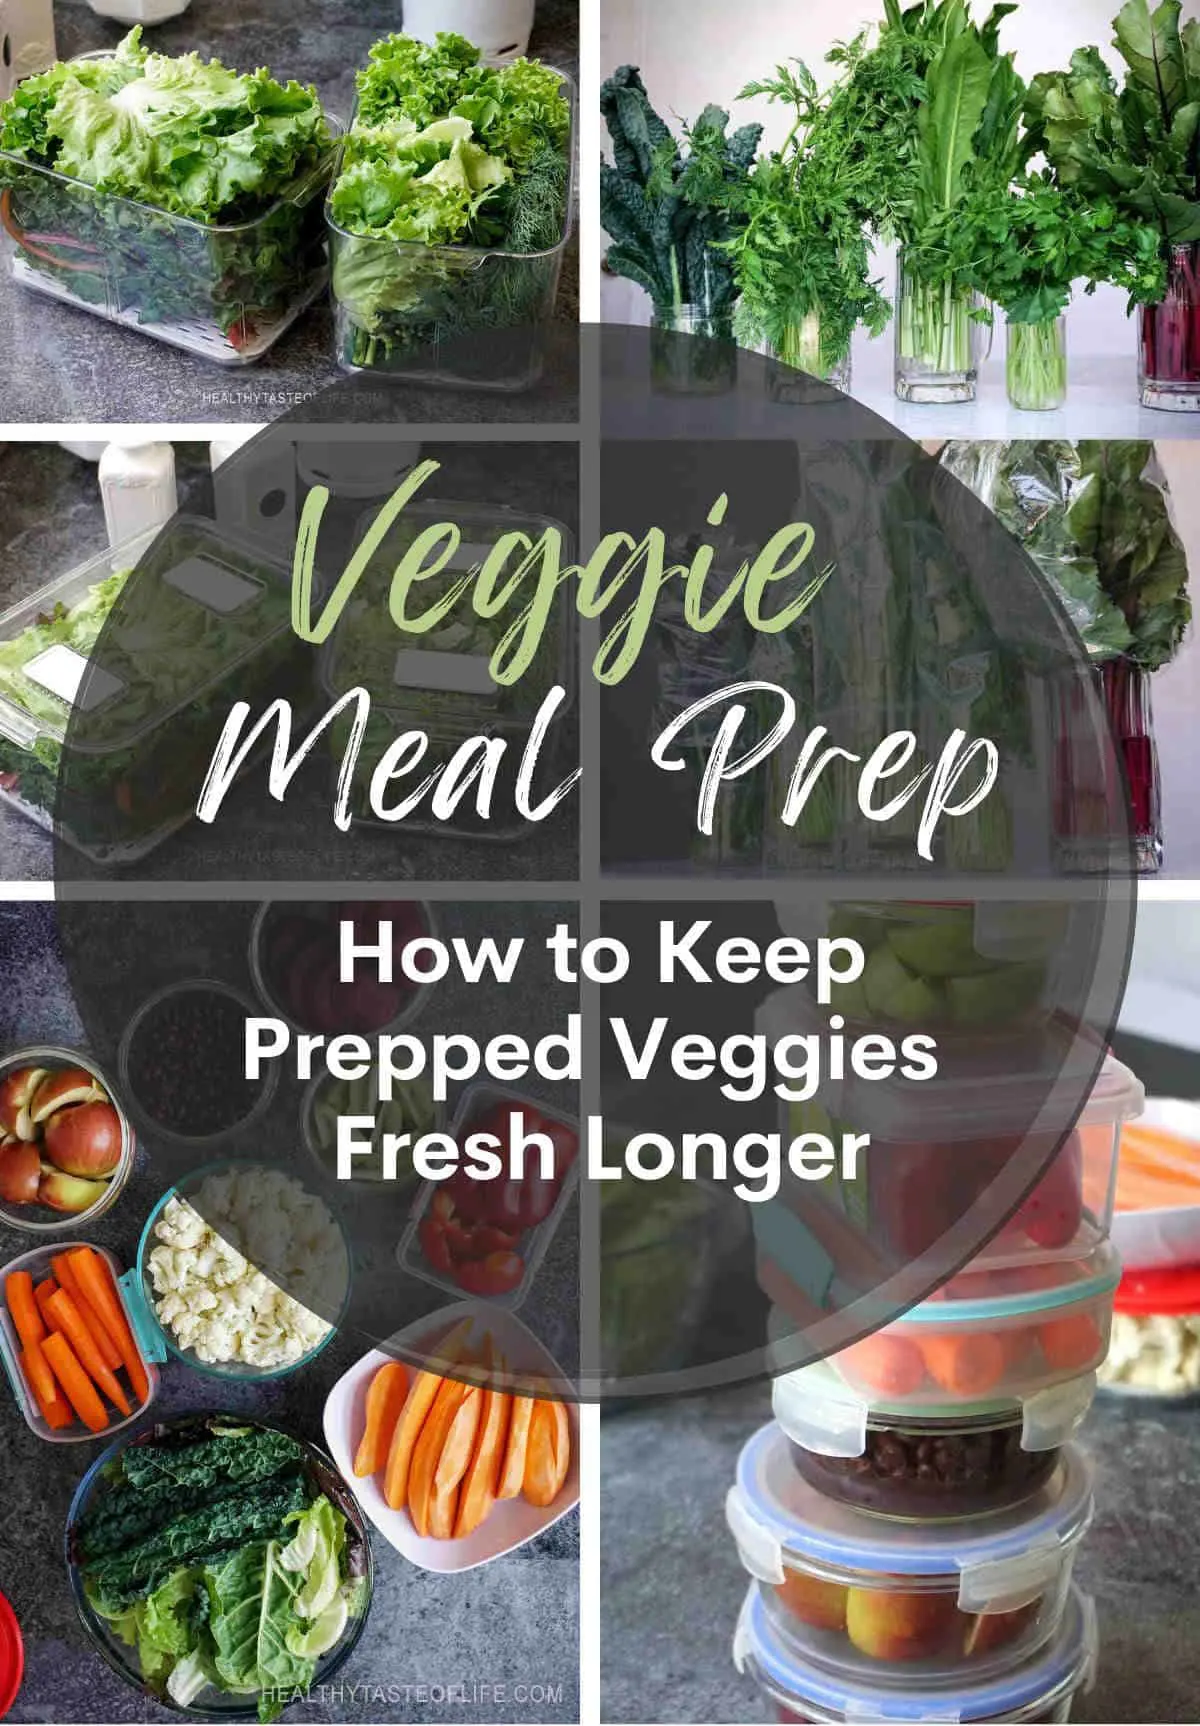 https://healthytasteoflife.com/wp-content/uploads/2022/08/meal-prep-veggies.jpg.webp